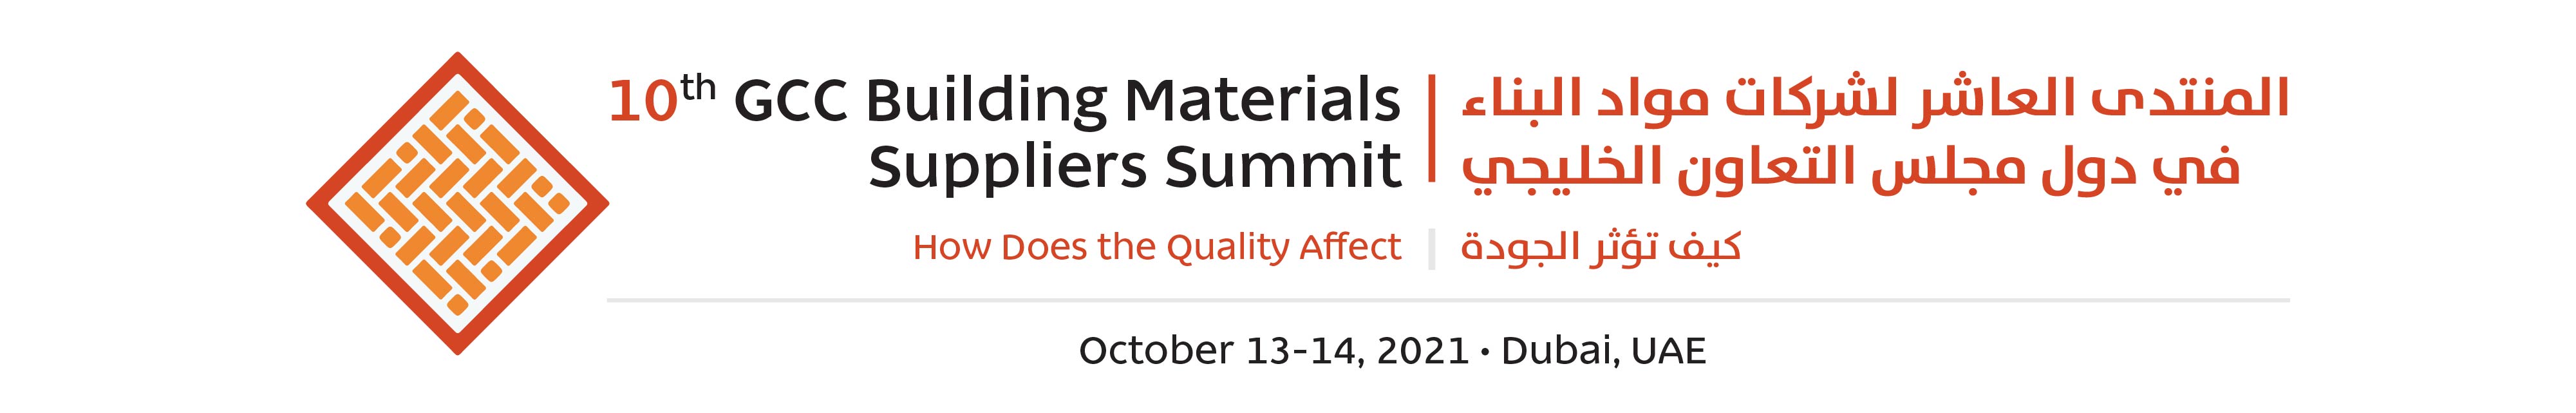 11th GCC Building Materials Suppliers Summit